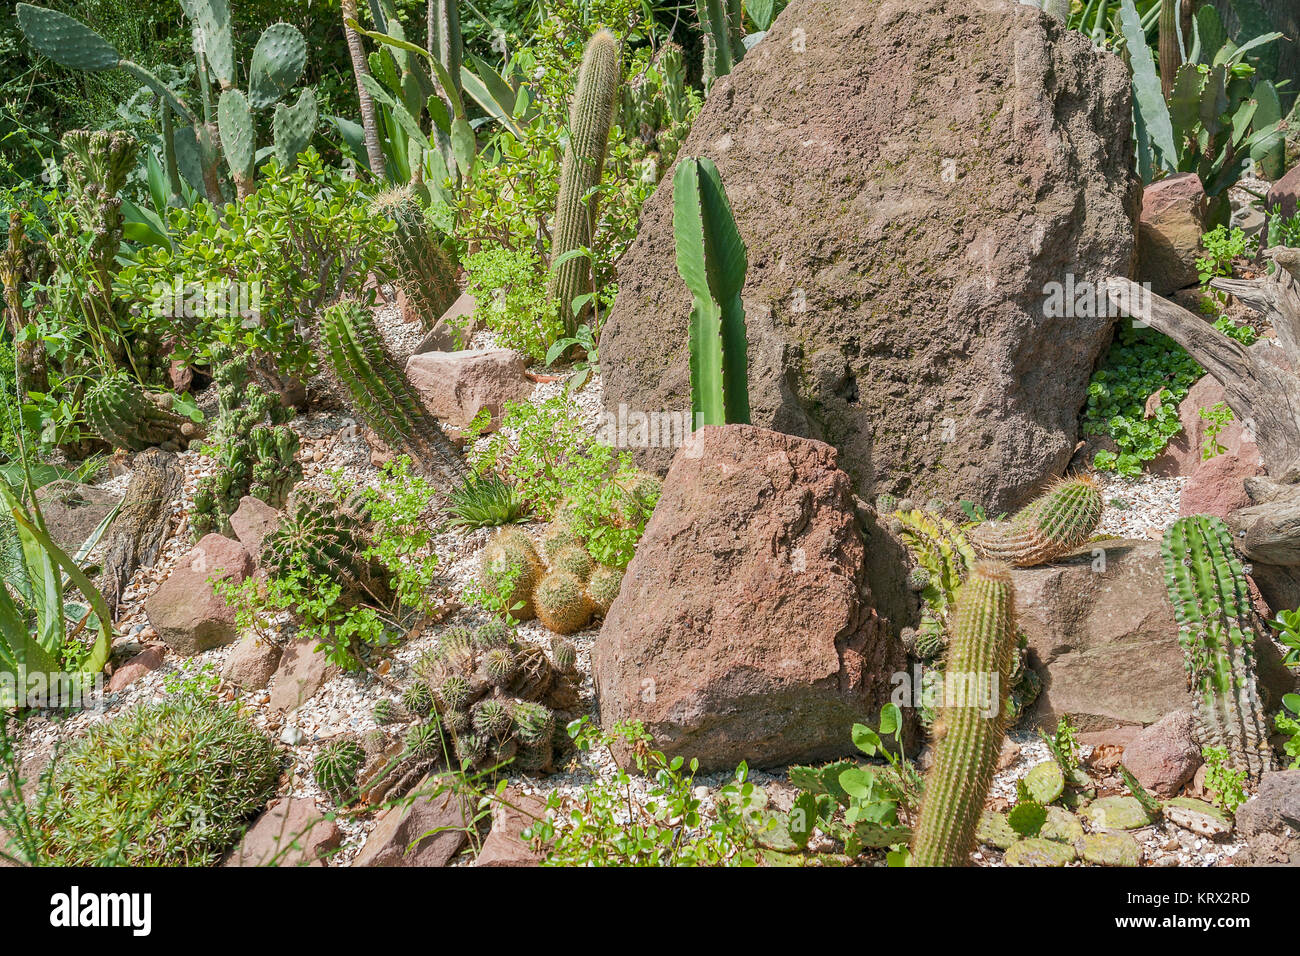 various cacti plants Stock Photo